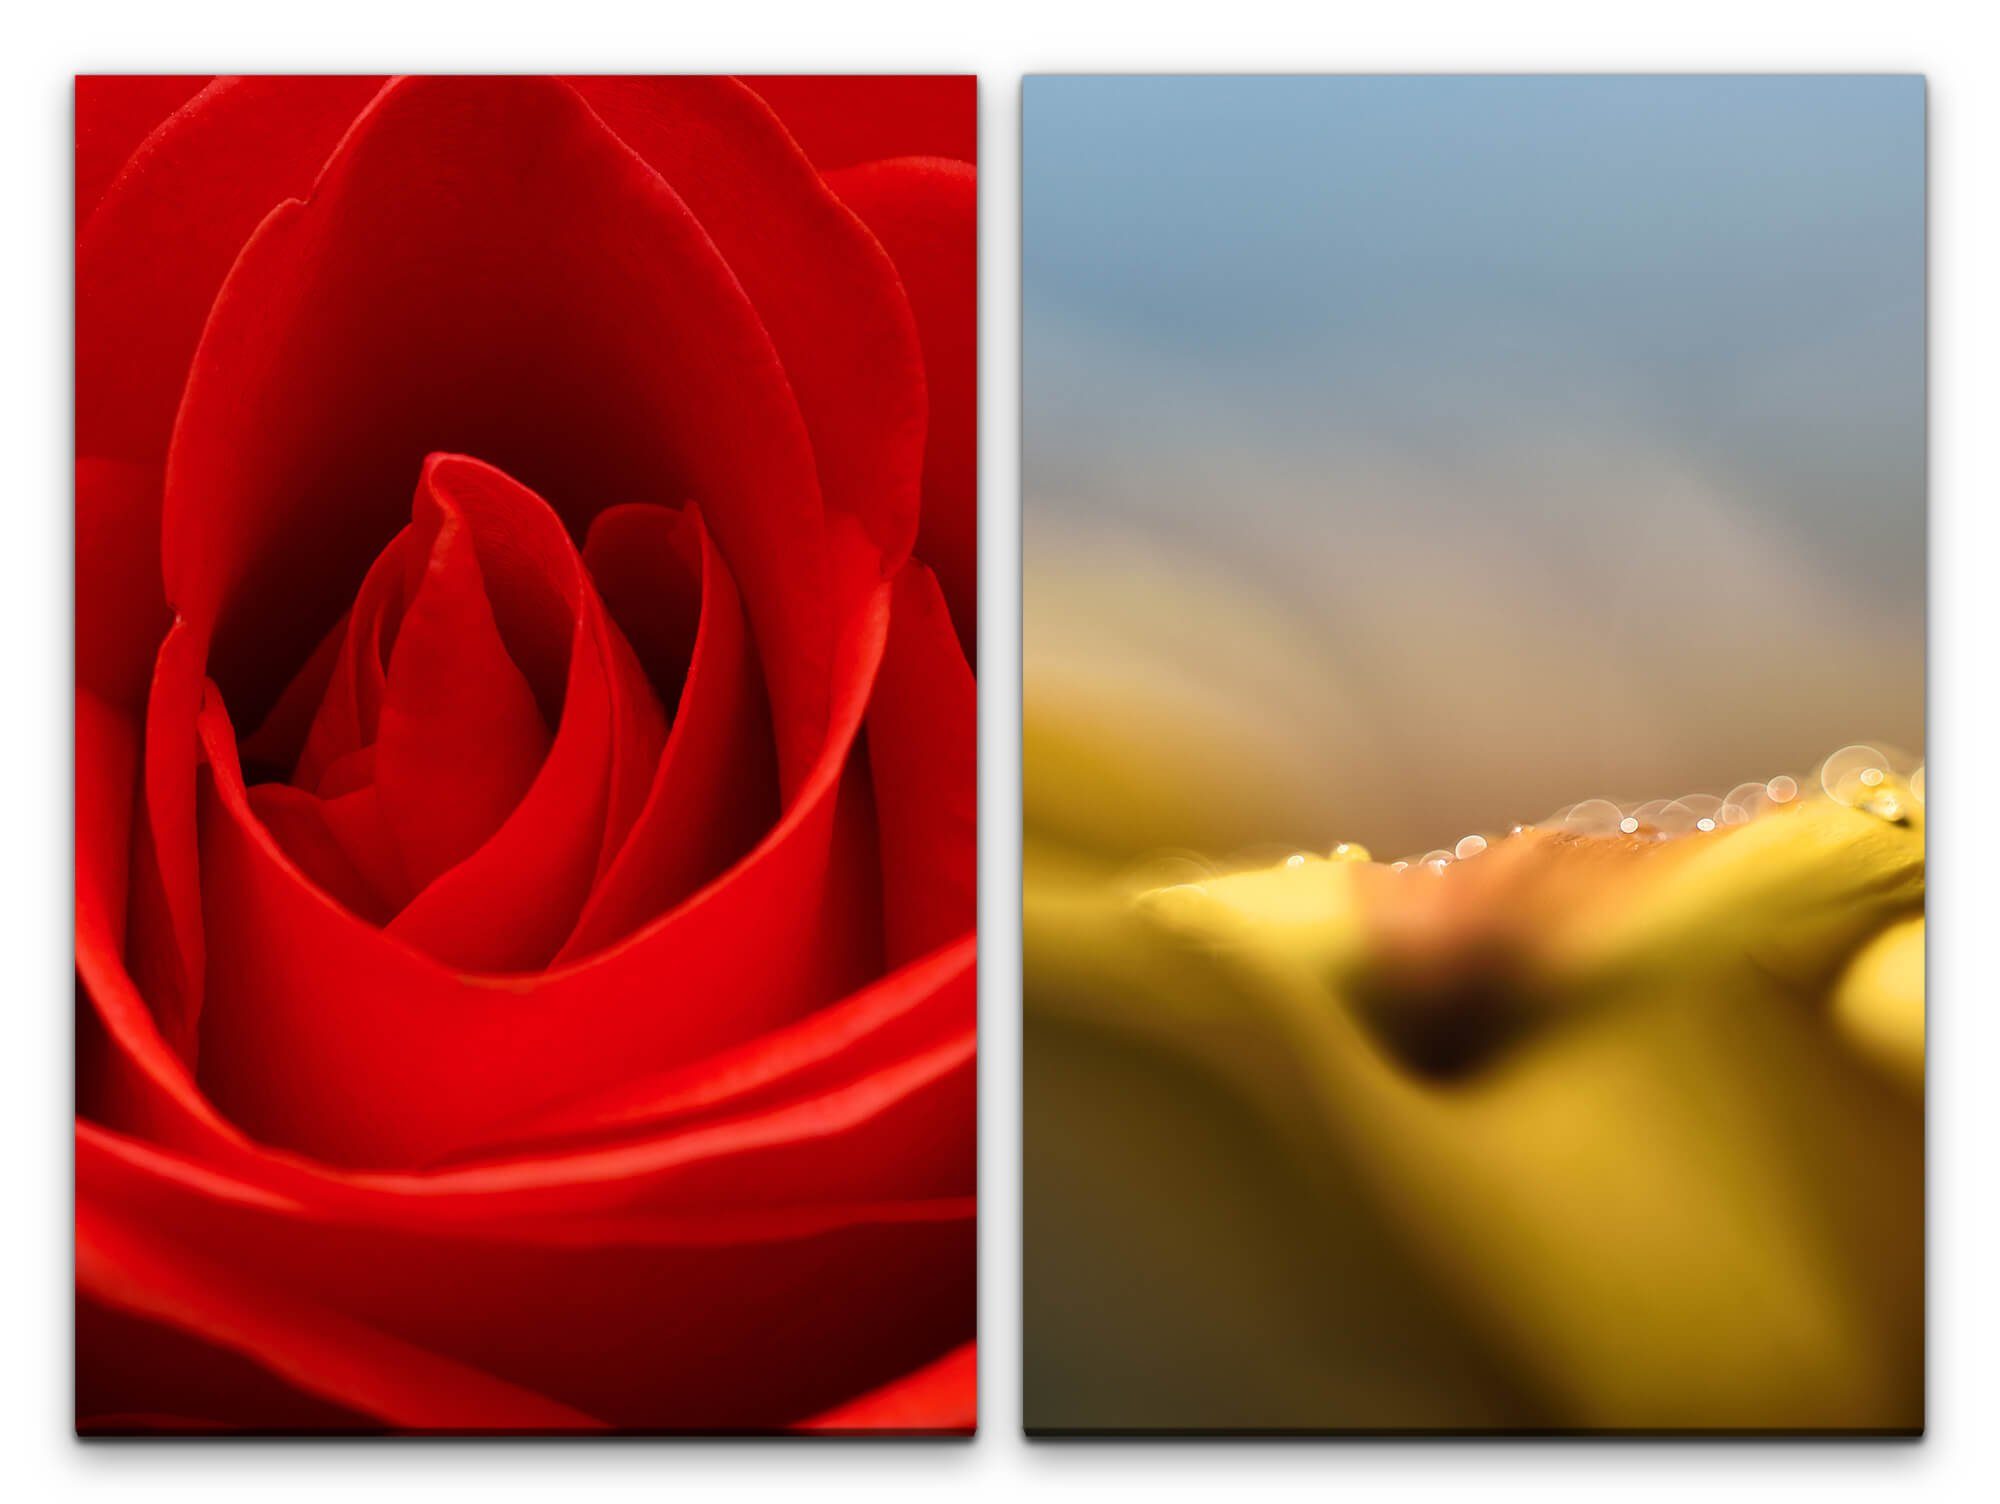 Sinus Art Leinwandbild 2 Bilder je 60x90cm Rose rote Blüte Dessous Liebe Romantisch Weich Feminin